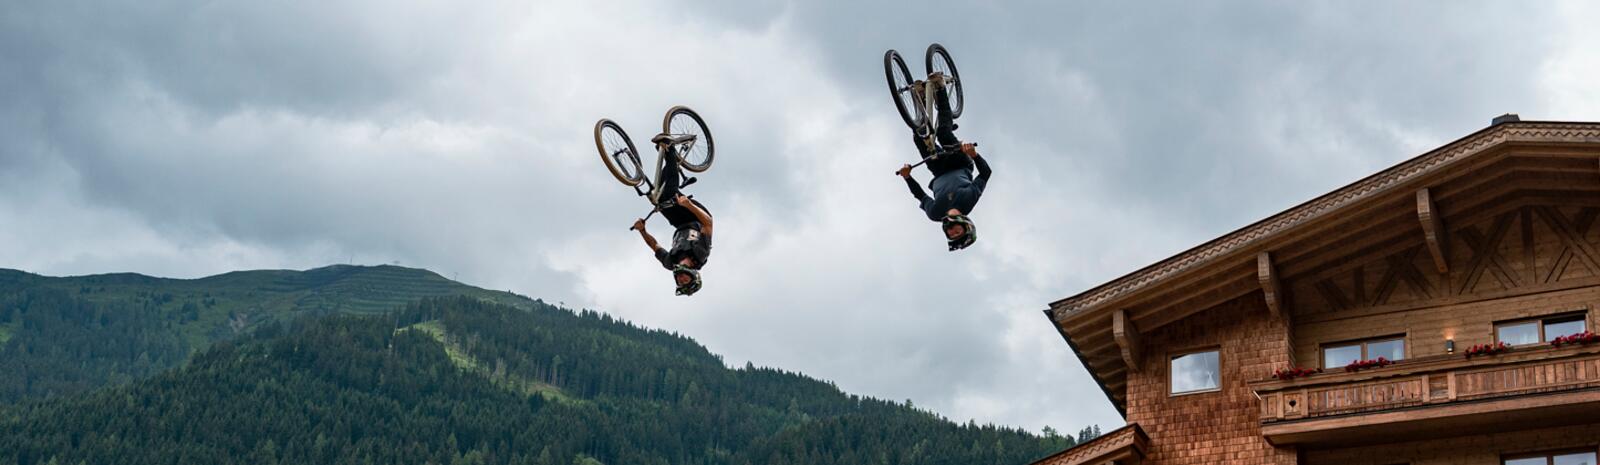 GlemmRide Bike Festival Saalbach - Masters of Dirt Big Air Show | © Klaus Listl